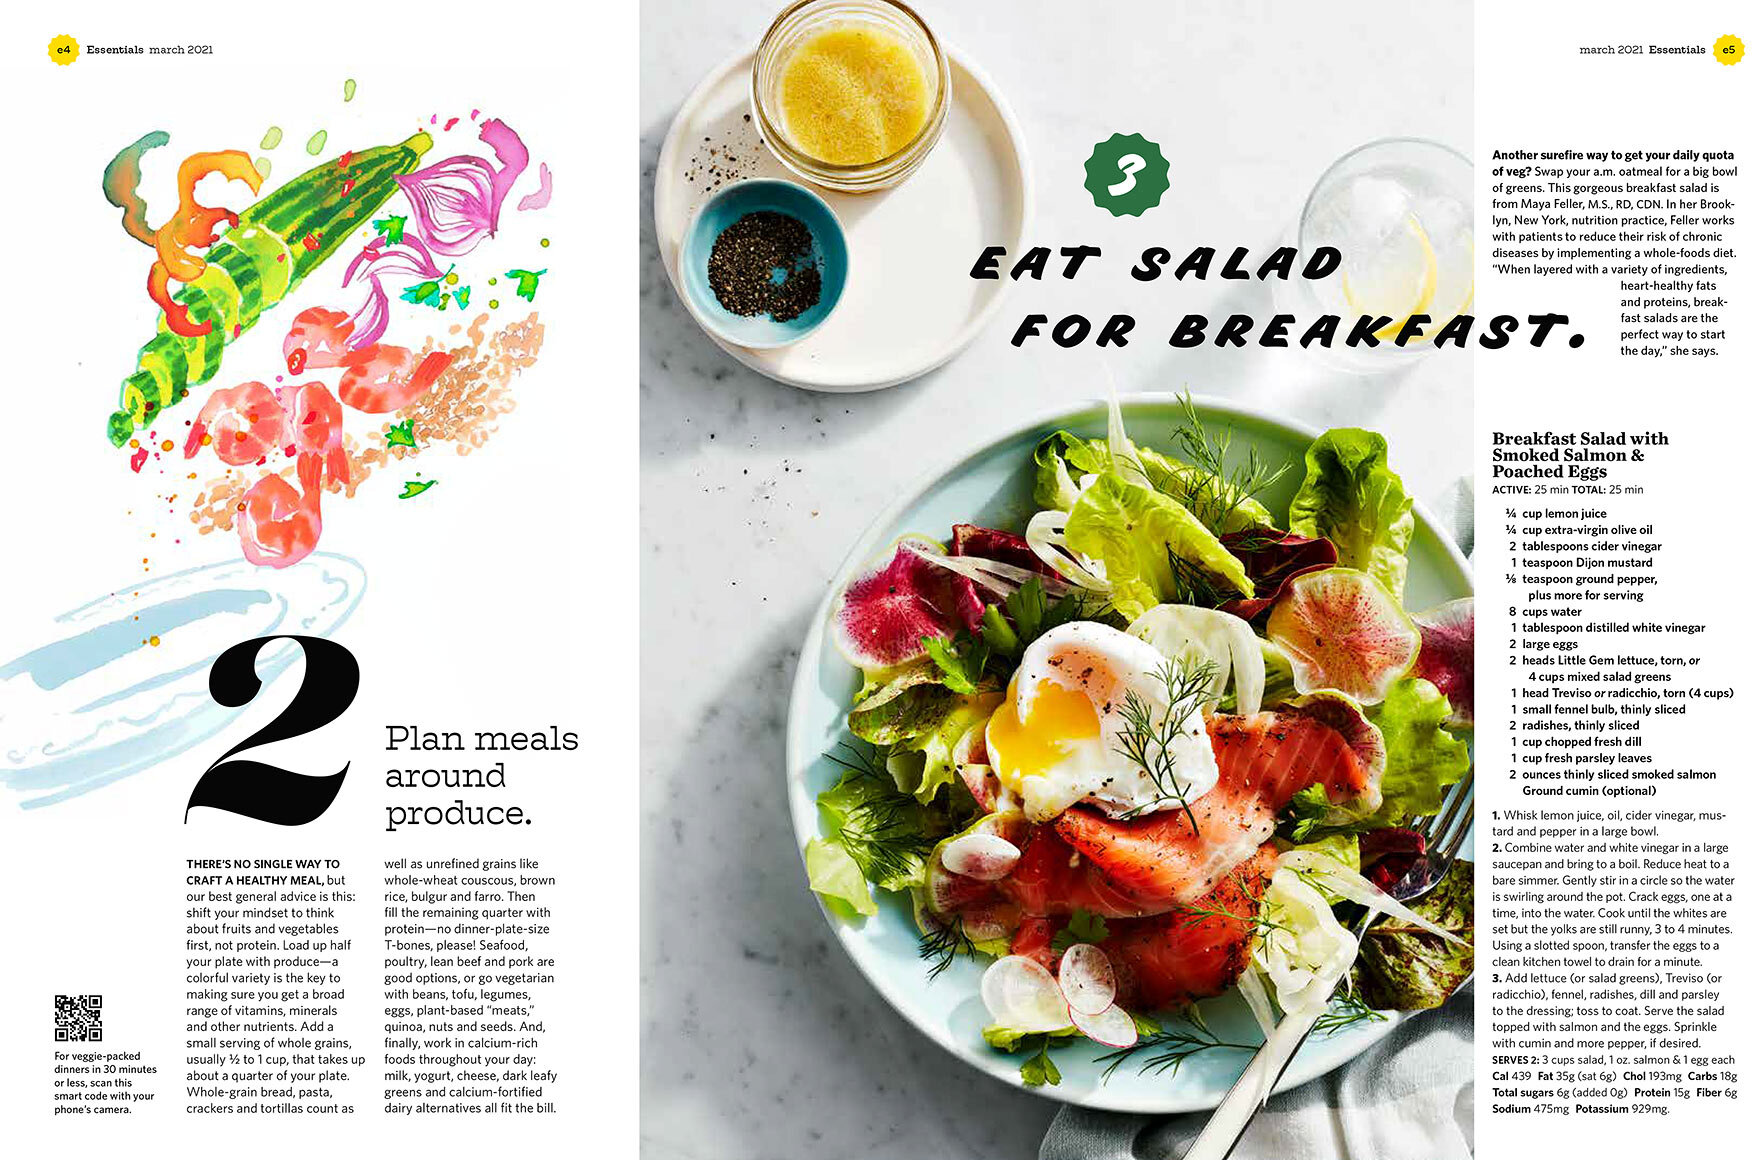 Eva-kolenko-best-top-food-photographer-produce-veggies-eating-well-recipes-heathy-vibrant-salad-breakfast-eggs-poached.jpg